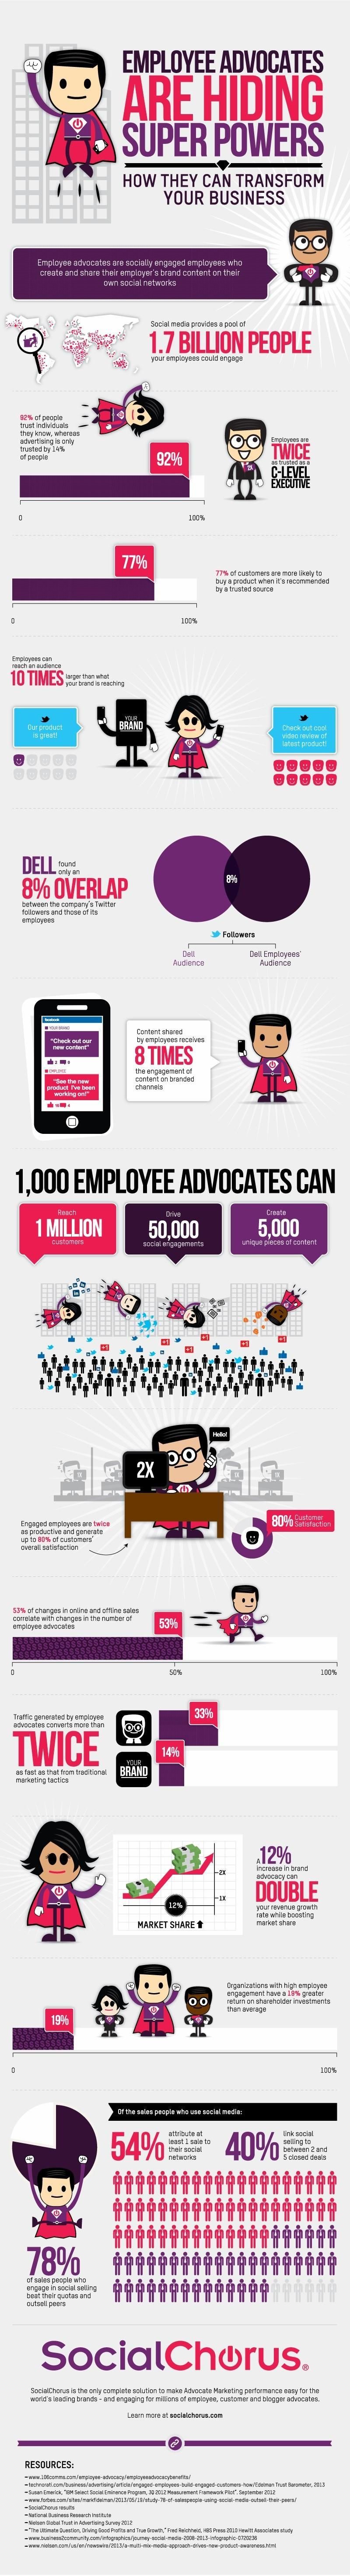 Original employee advocate superpowers infographic